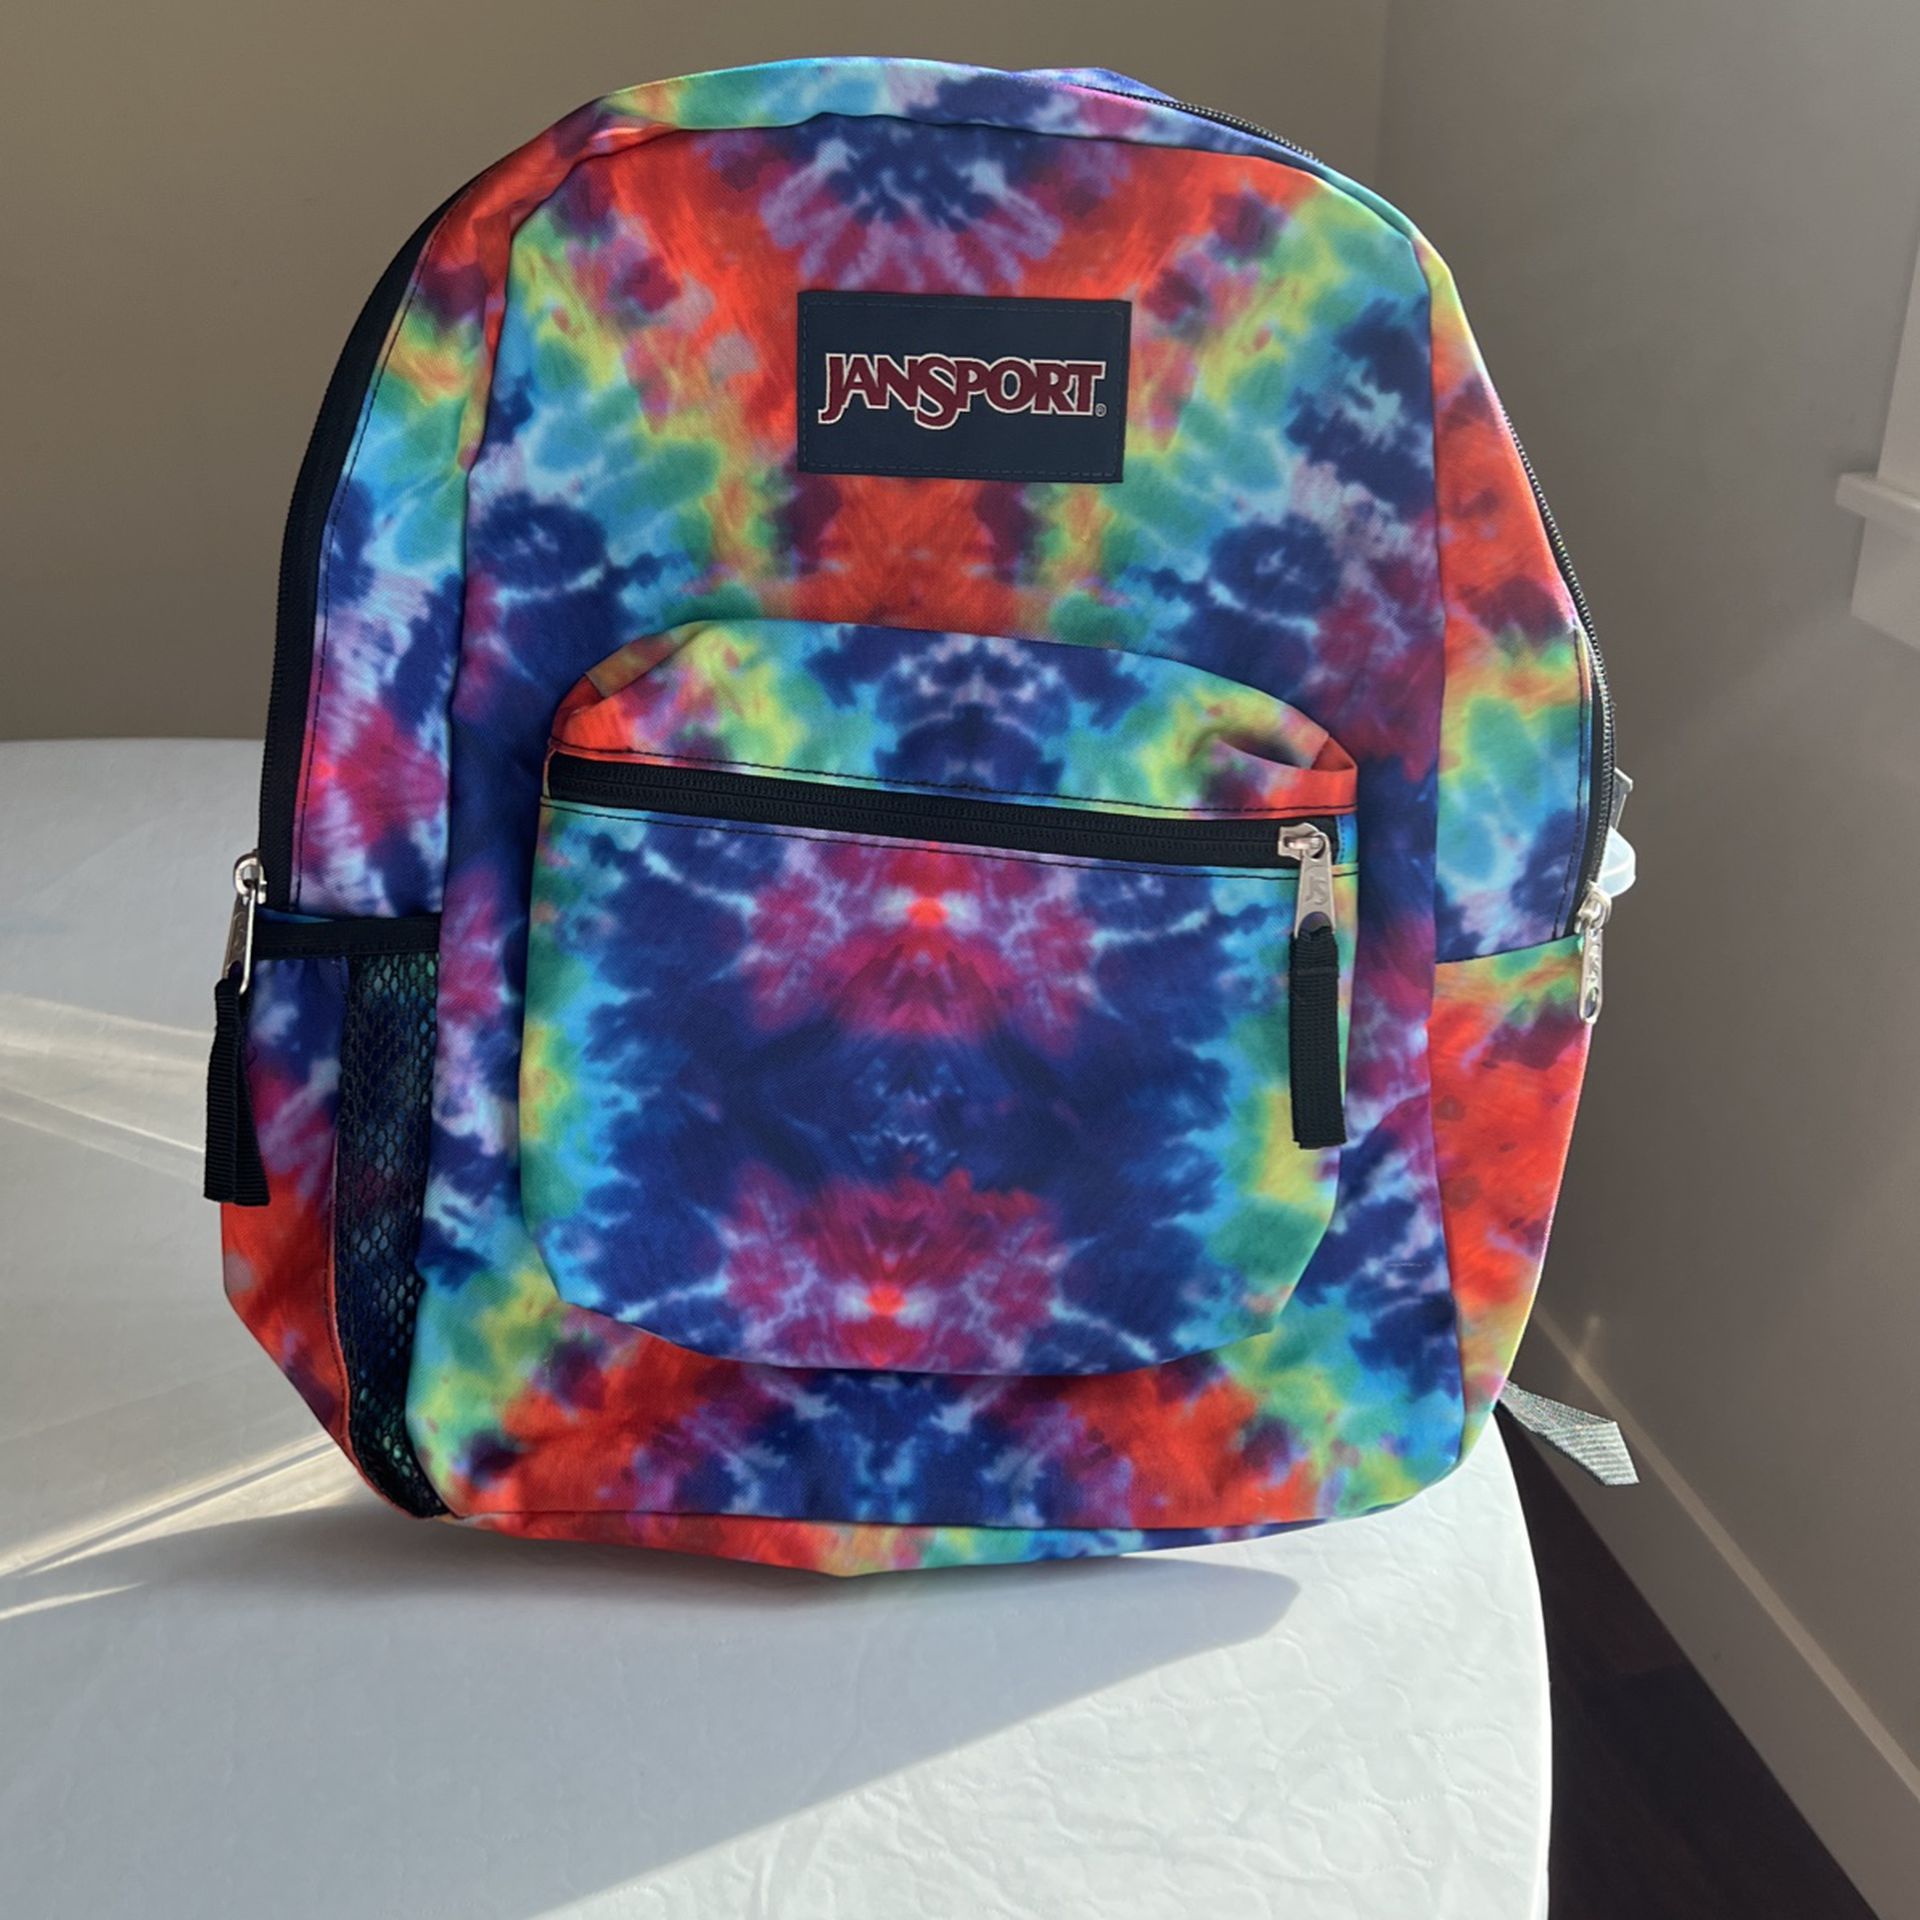 Jansport Rainbow Tie-dye Backpack